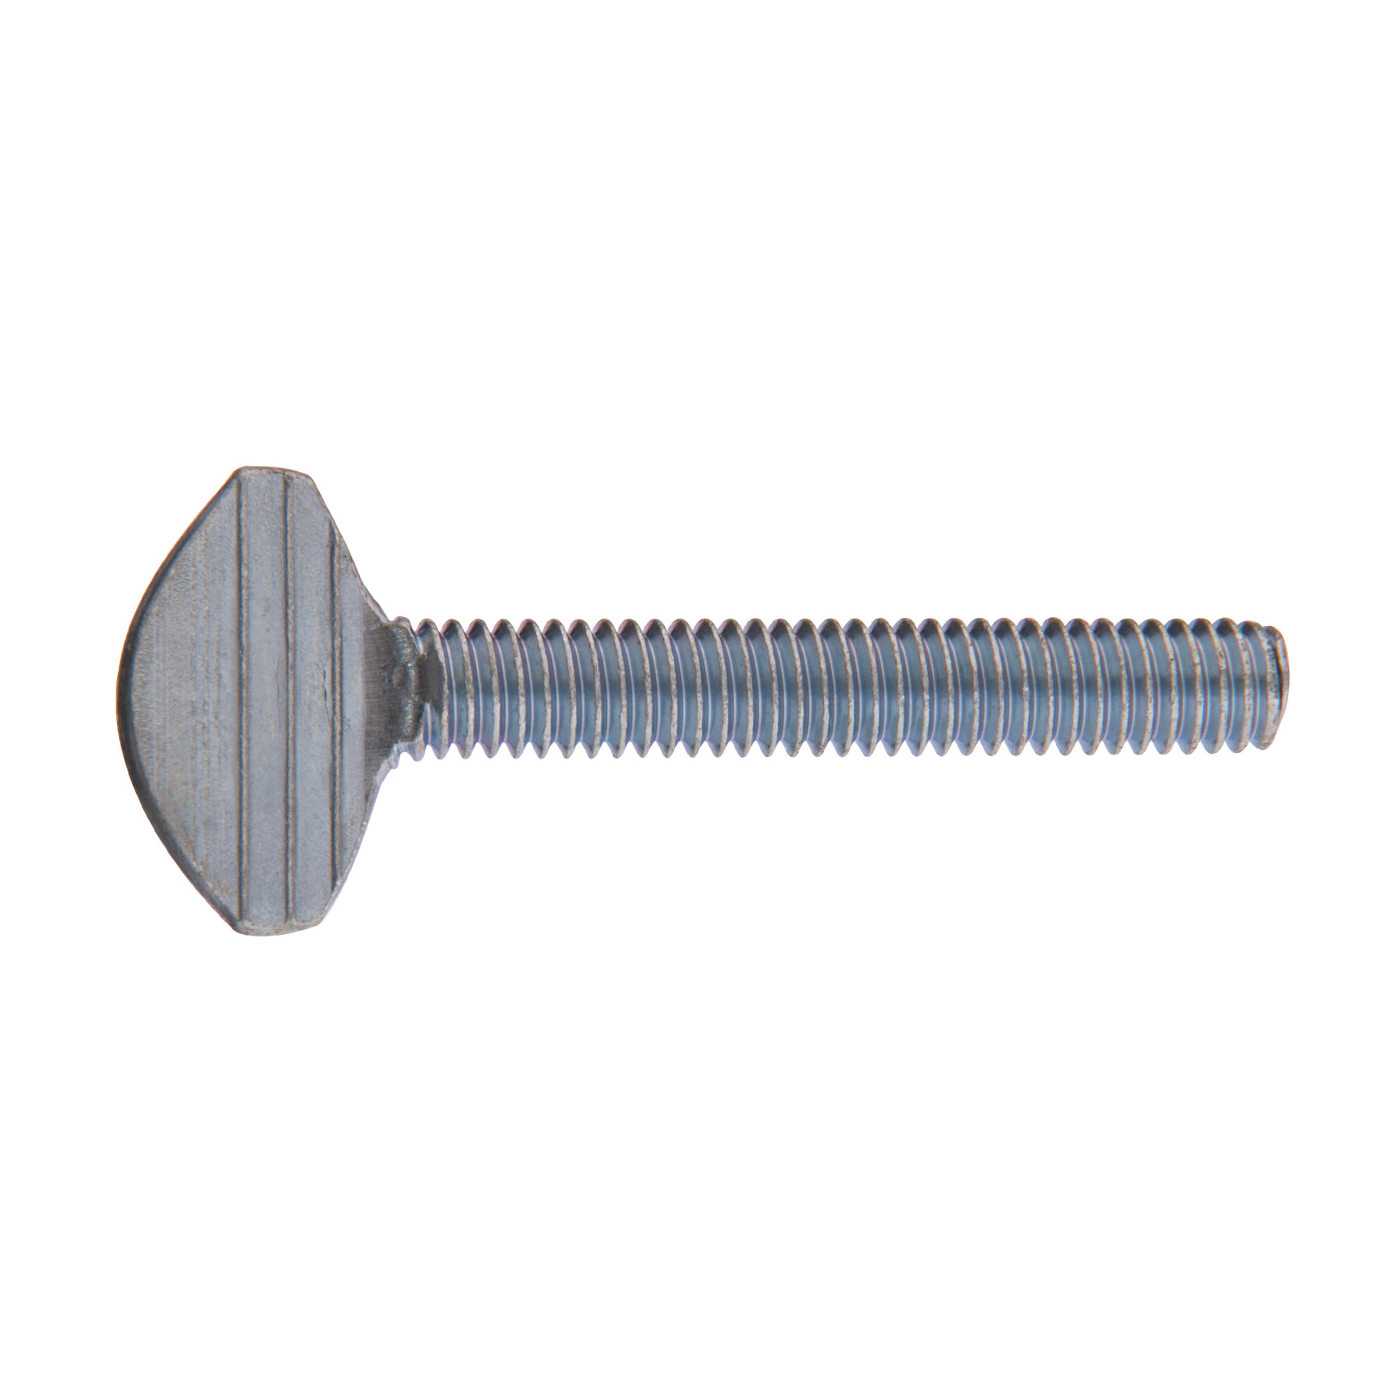 880943 Machine Screw, #8-32 Thread, 1/2 in L, Coarse Thread, Blunt Point, Steel, Zinc-Plated